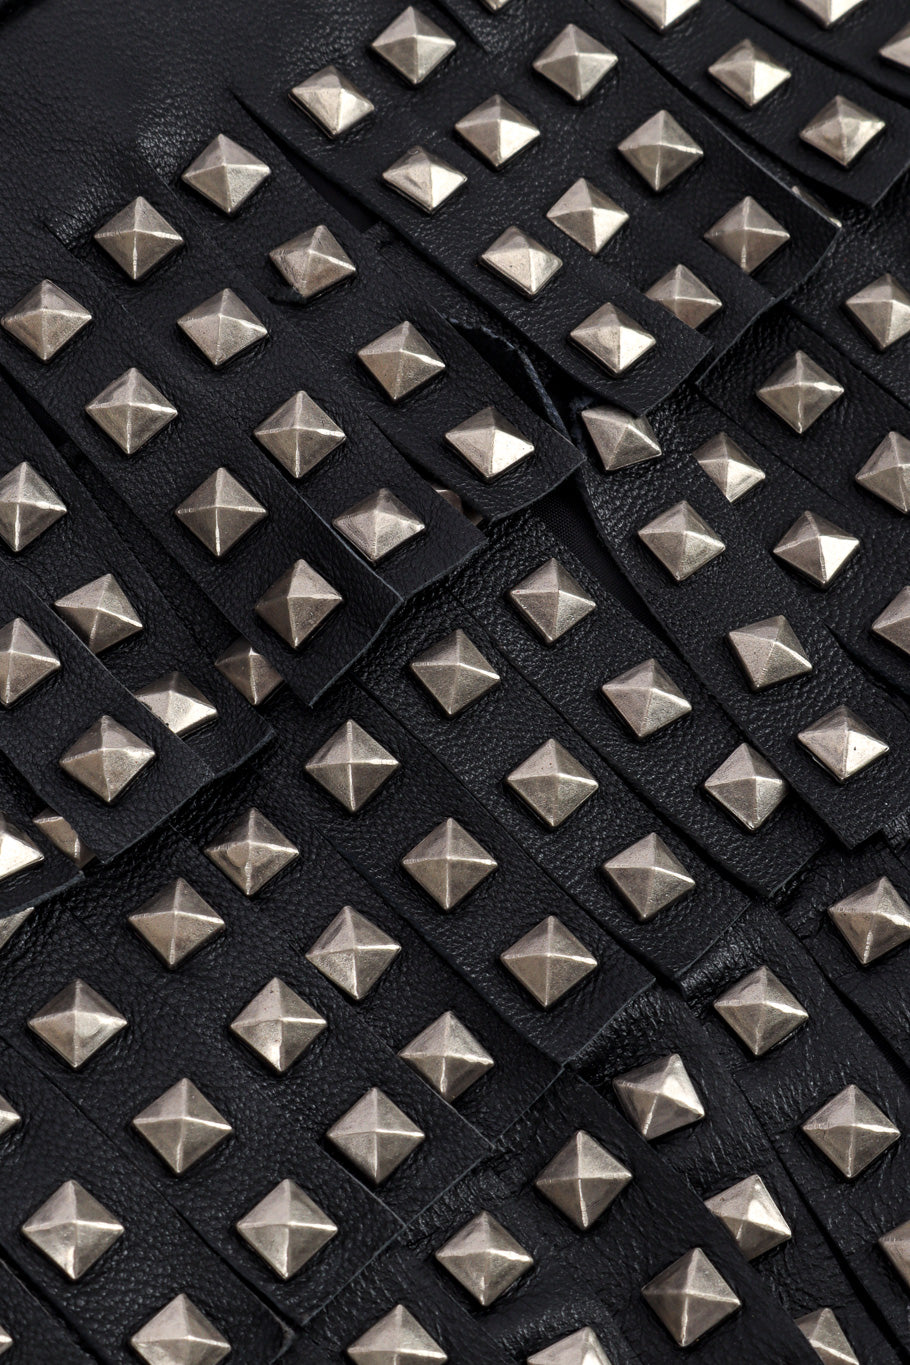 Class Roberto Cavalli Studded Leather Trench Coat studded fringe closeup @recessla